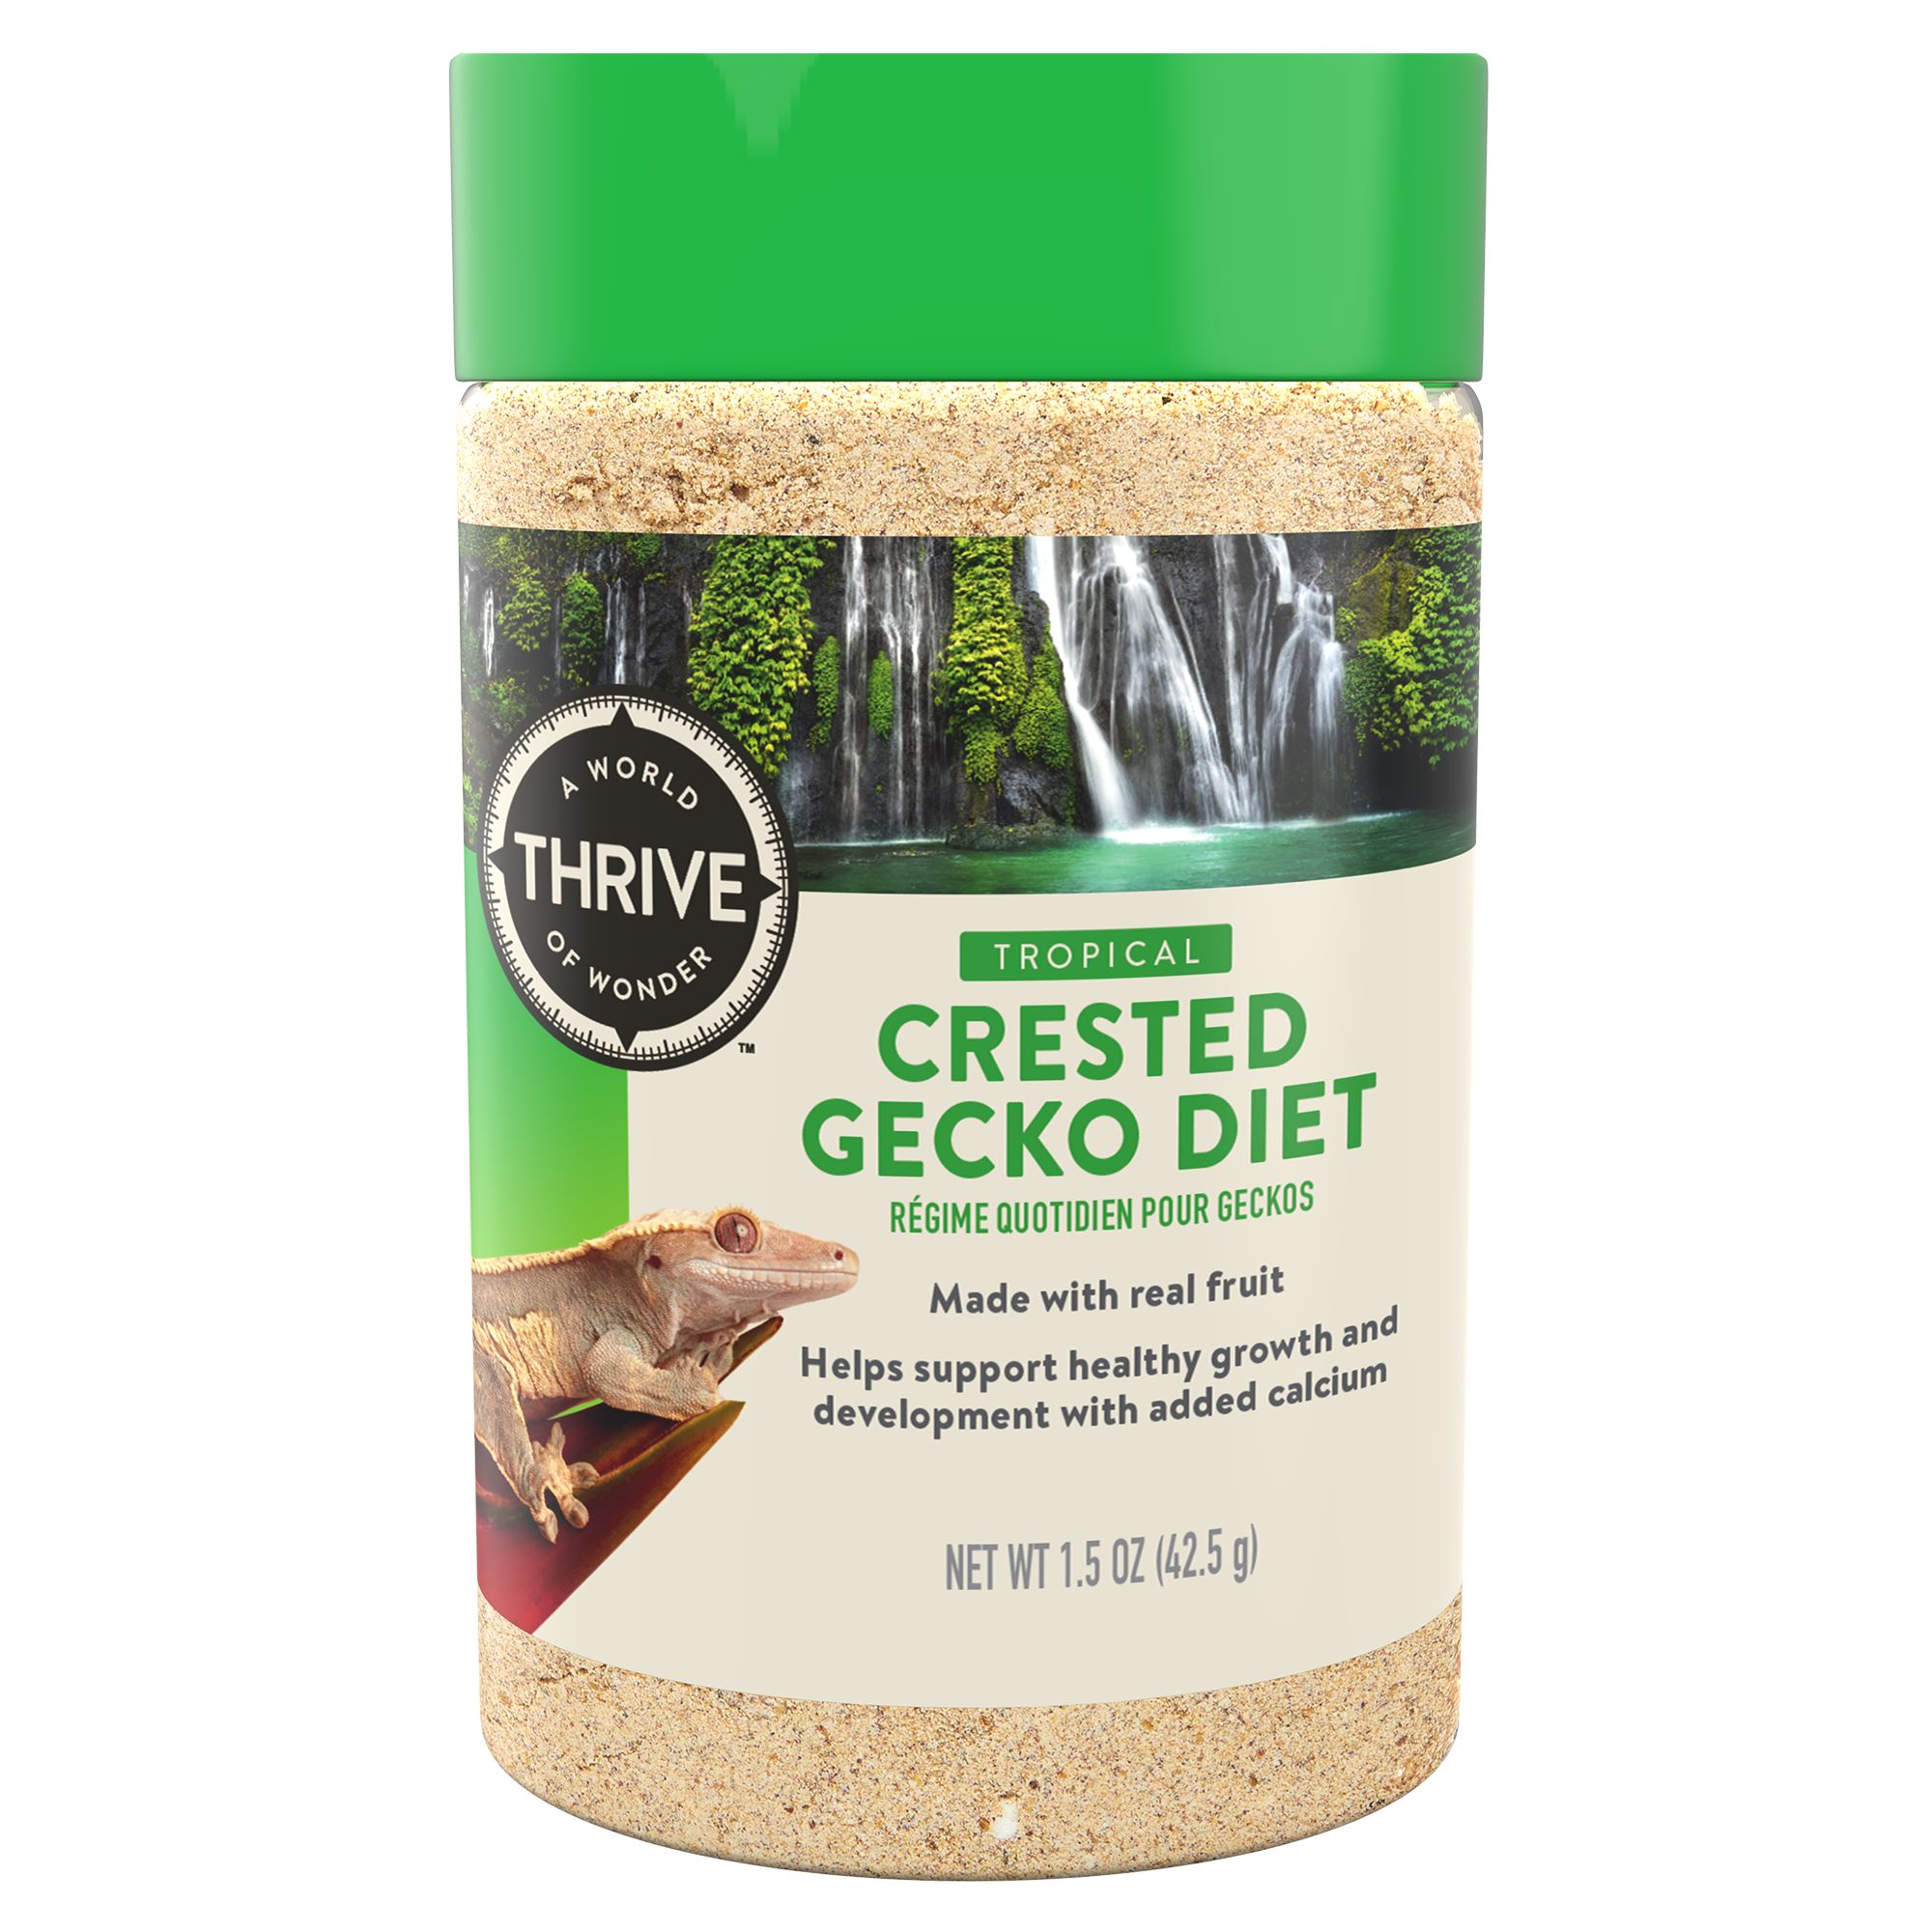 petsmart gecko food